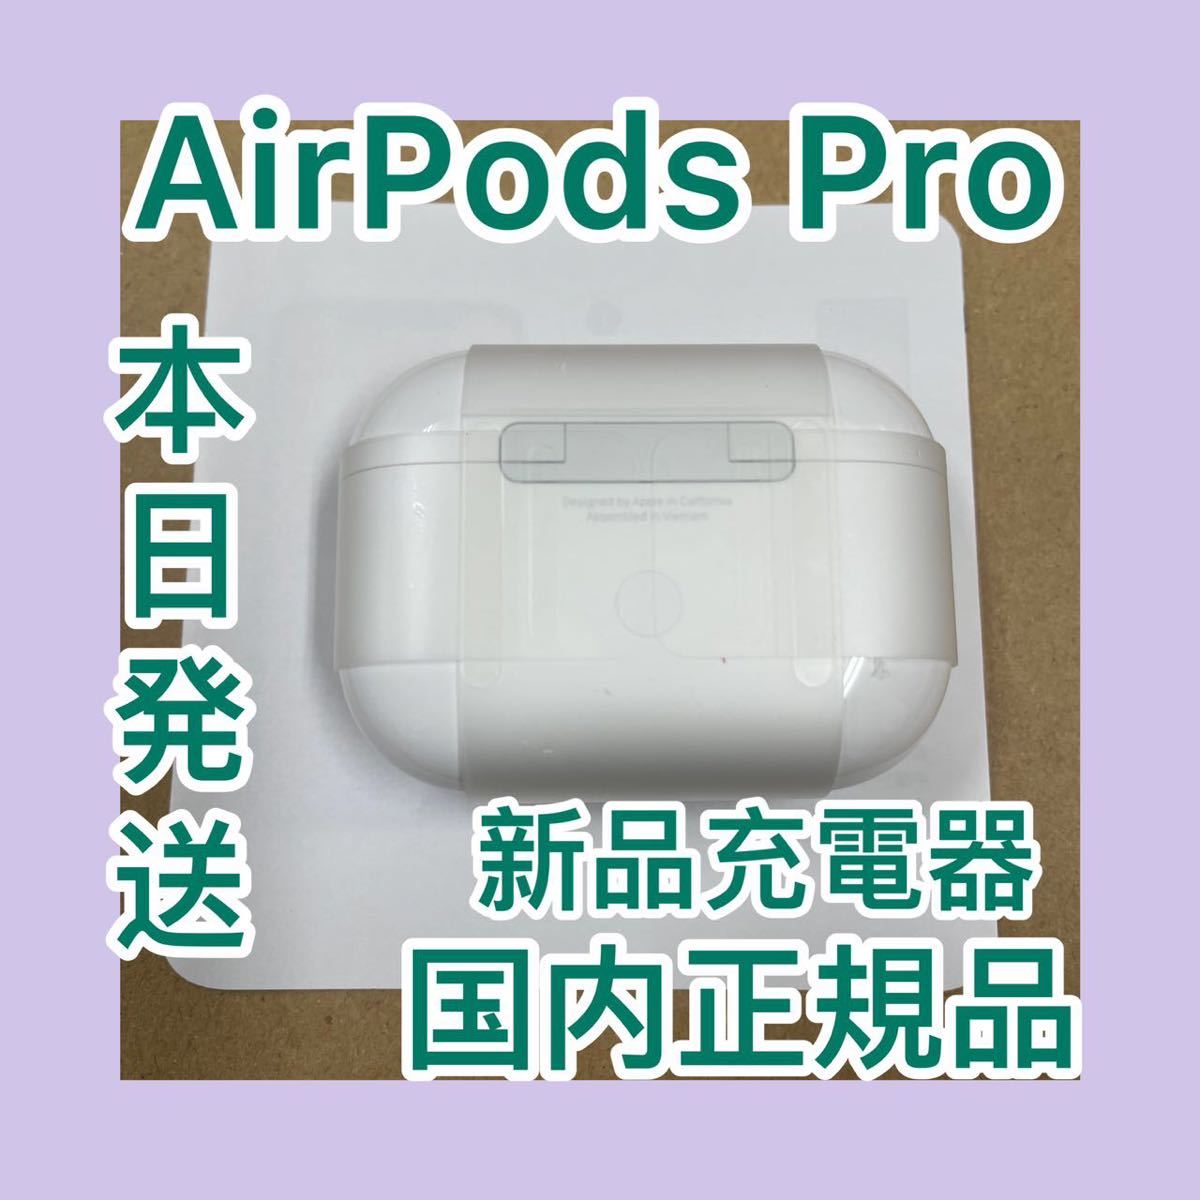 Apple AirPods Pro 新品未使用品充電ケース エアーポッズ プロ アップル 充電器 オーディオ機器 イヤホン、ヘッドホン  www.potentehouston.com